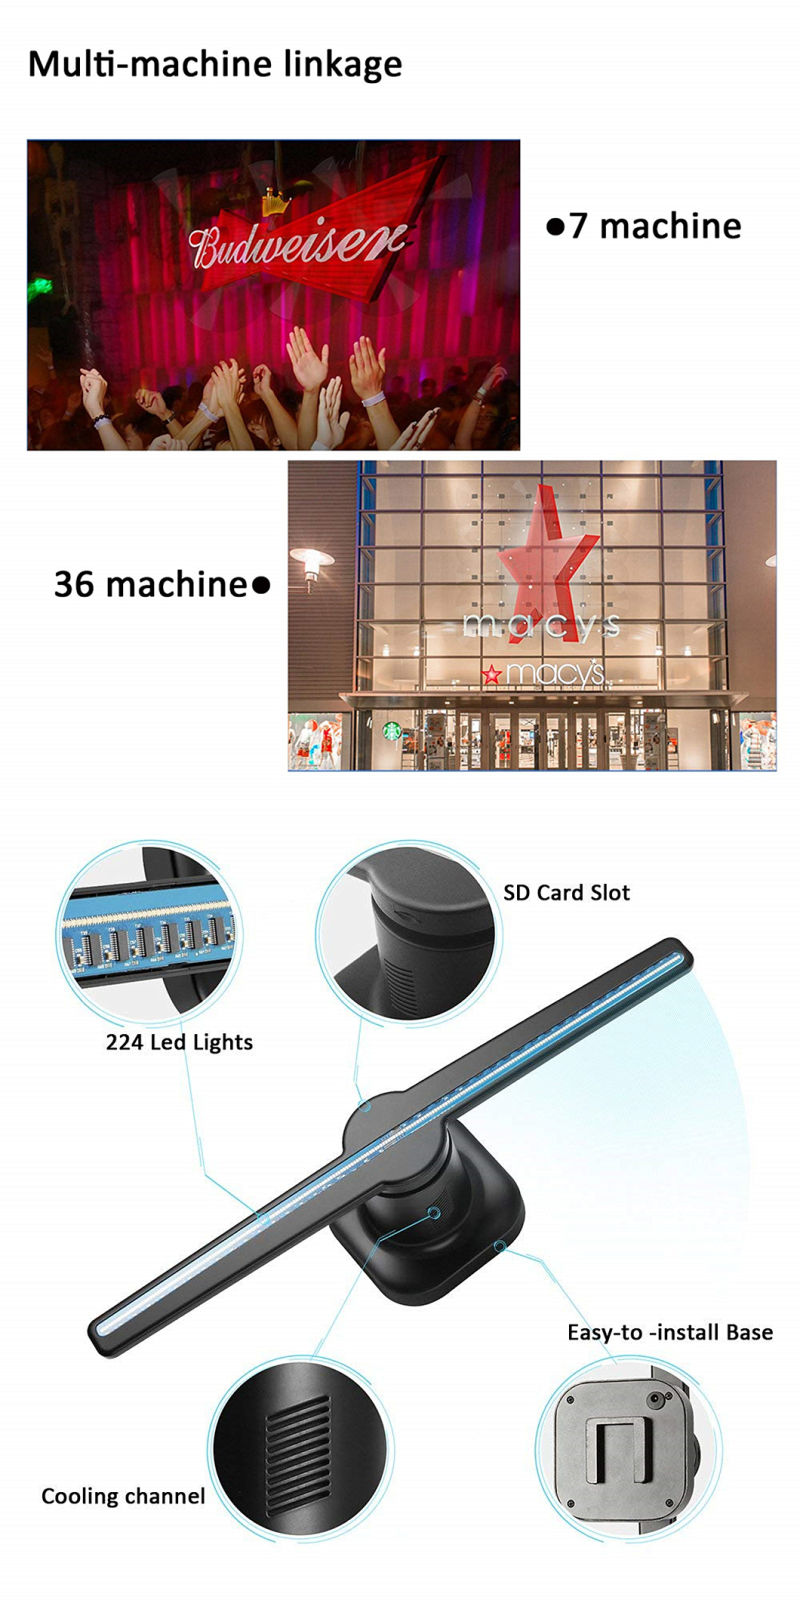 3D Hologram 43cm Advertising Display LED Fan 3D Holographic Display 3D Hologram Display New